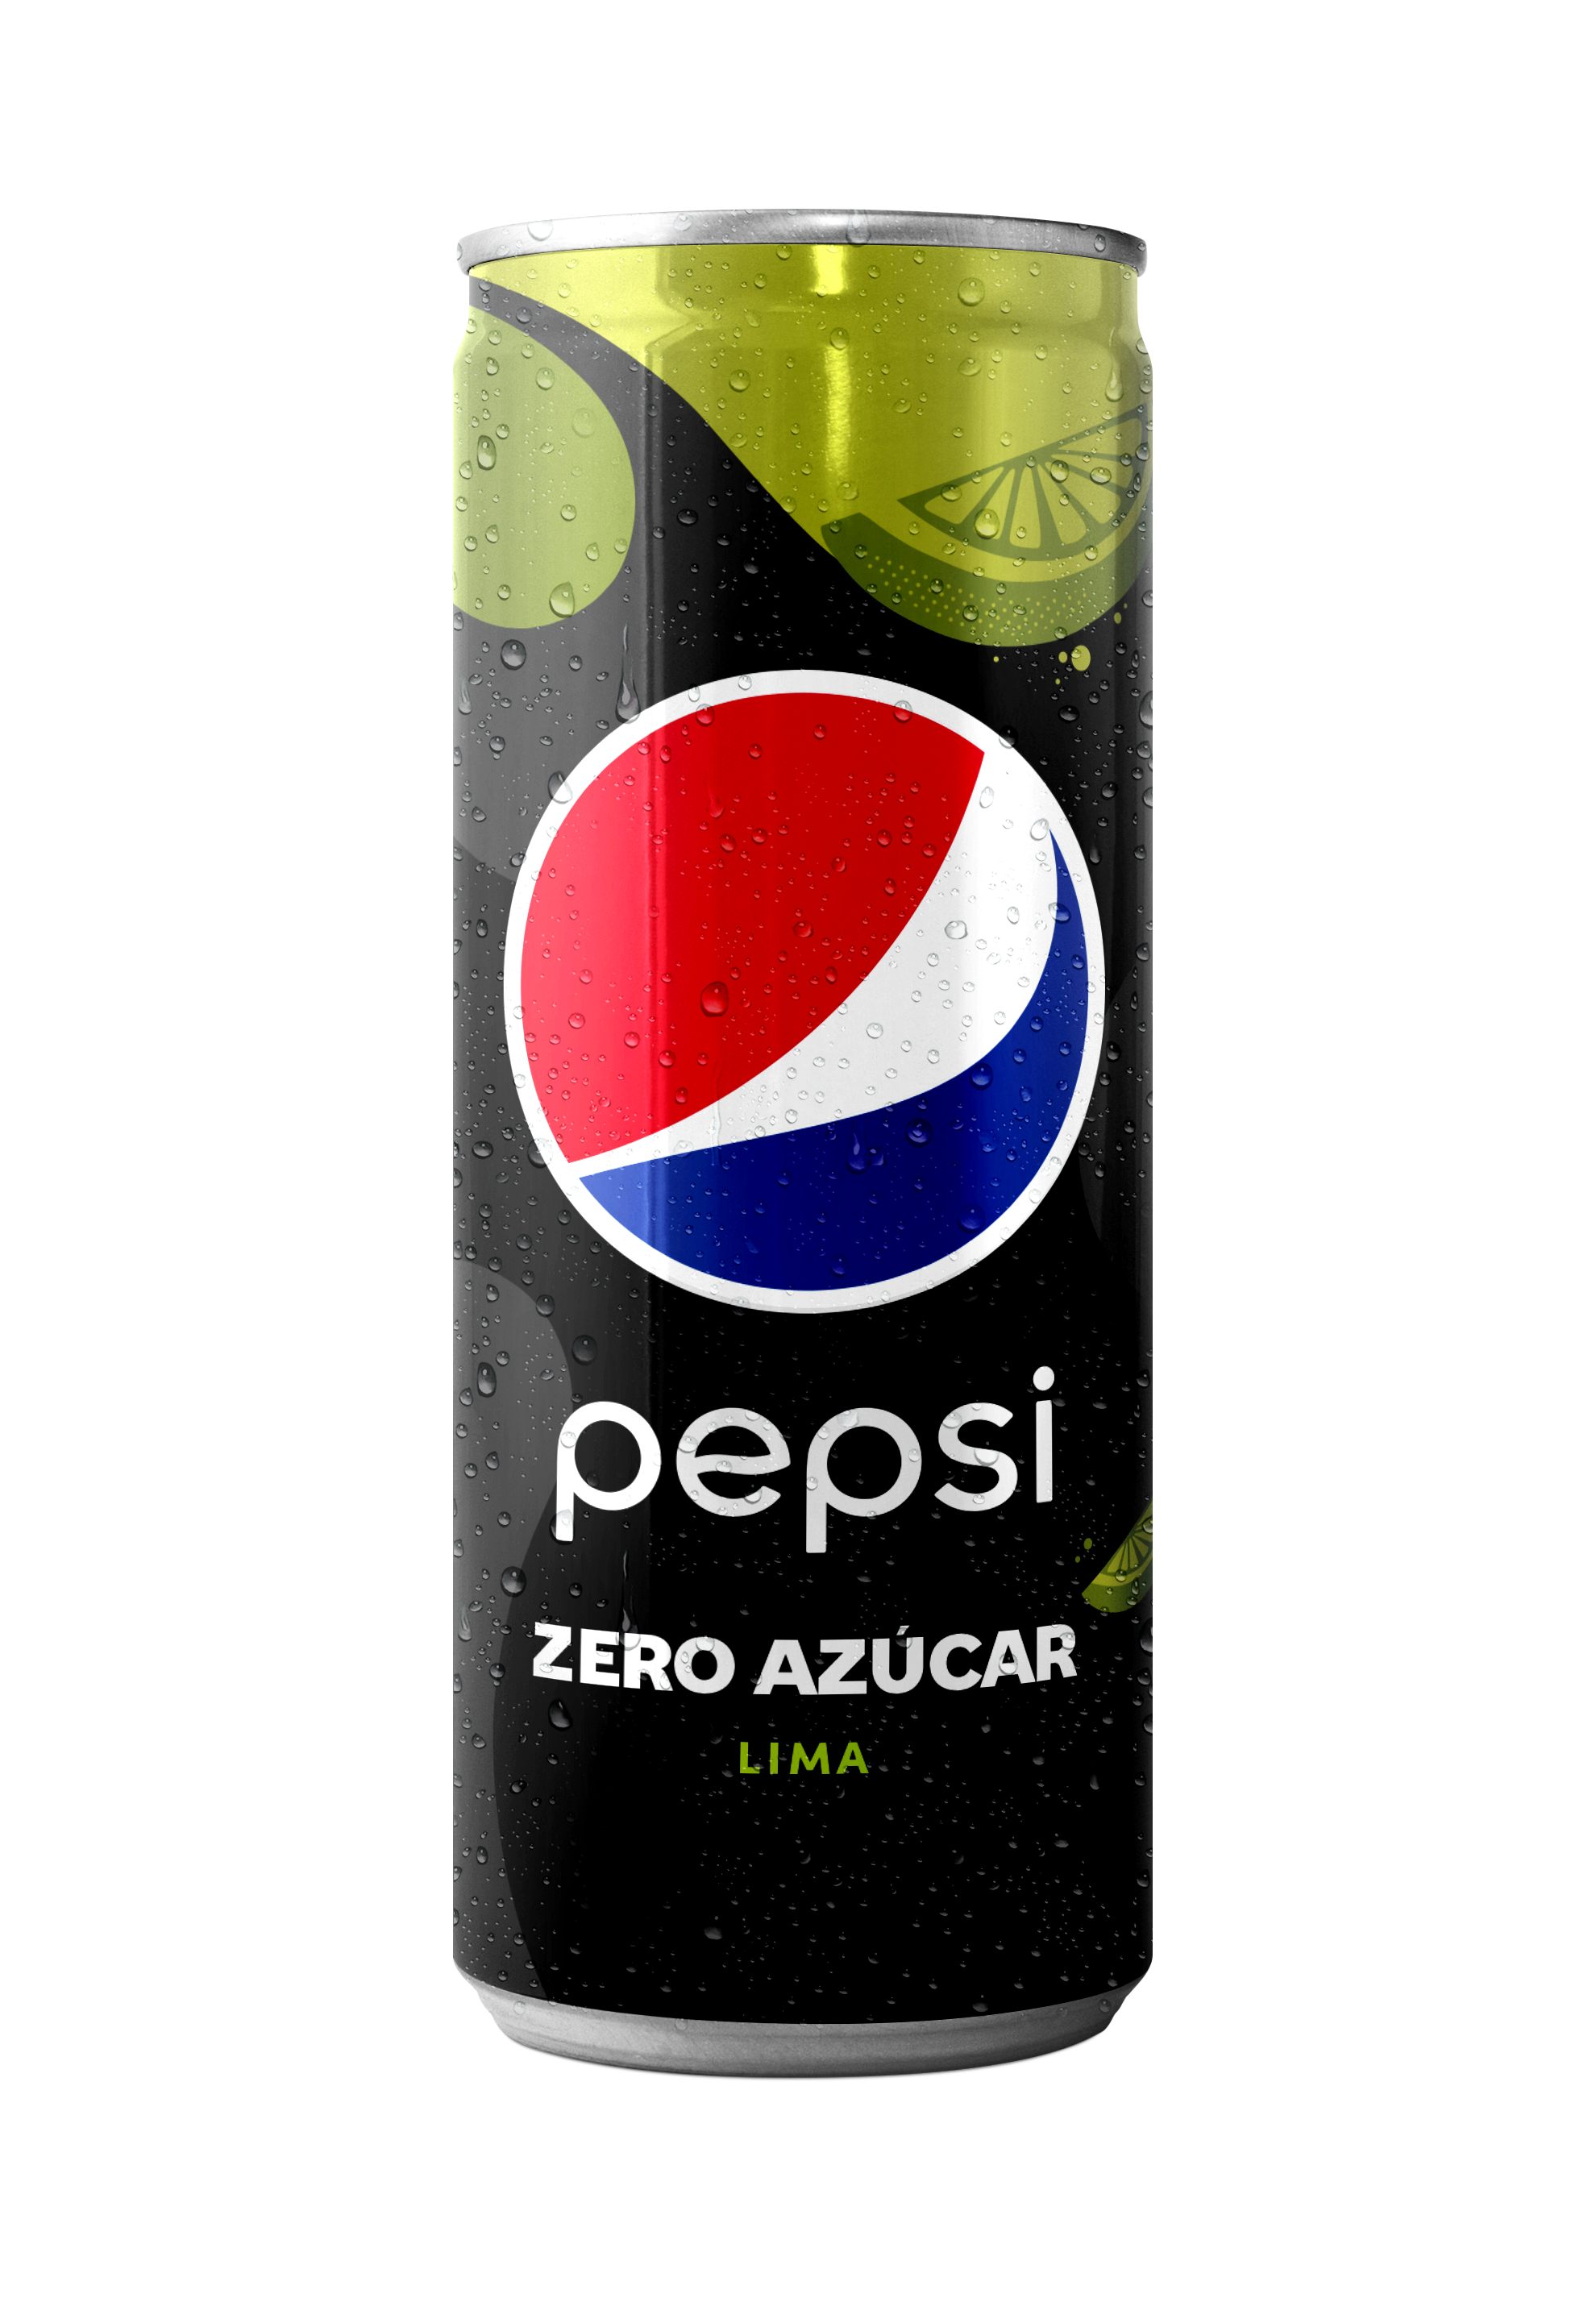 Pepsi lima